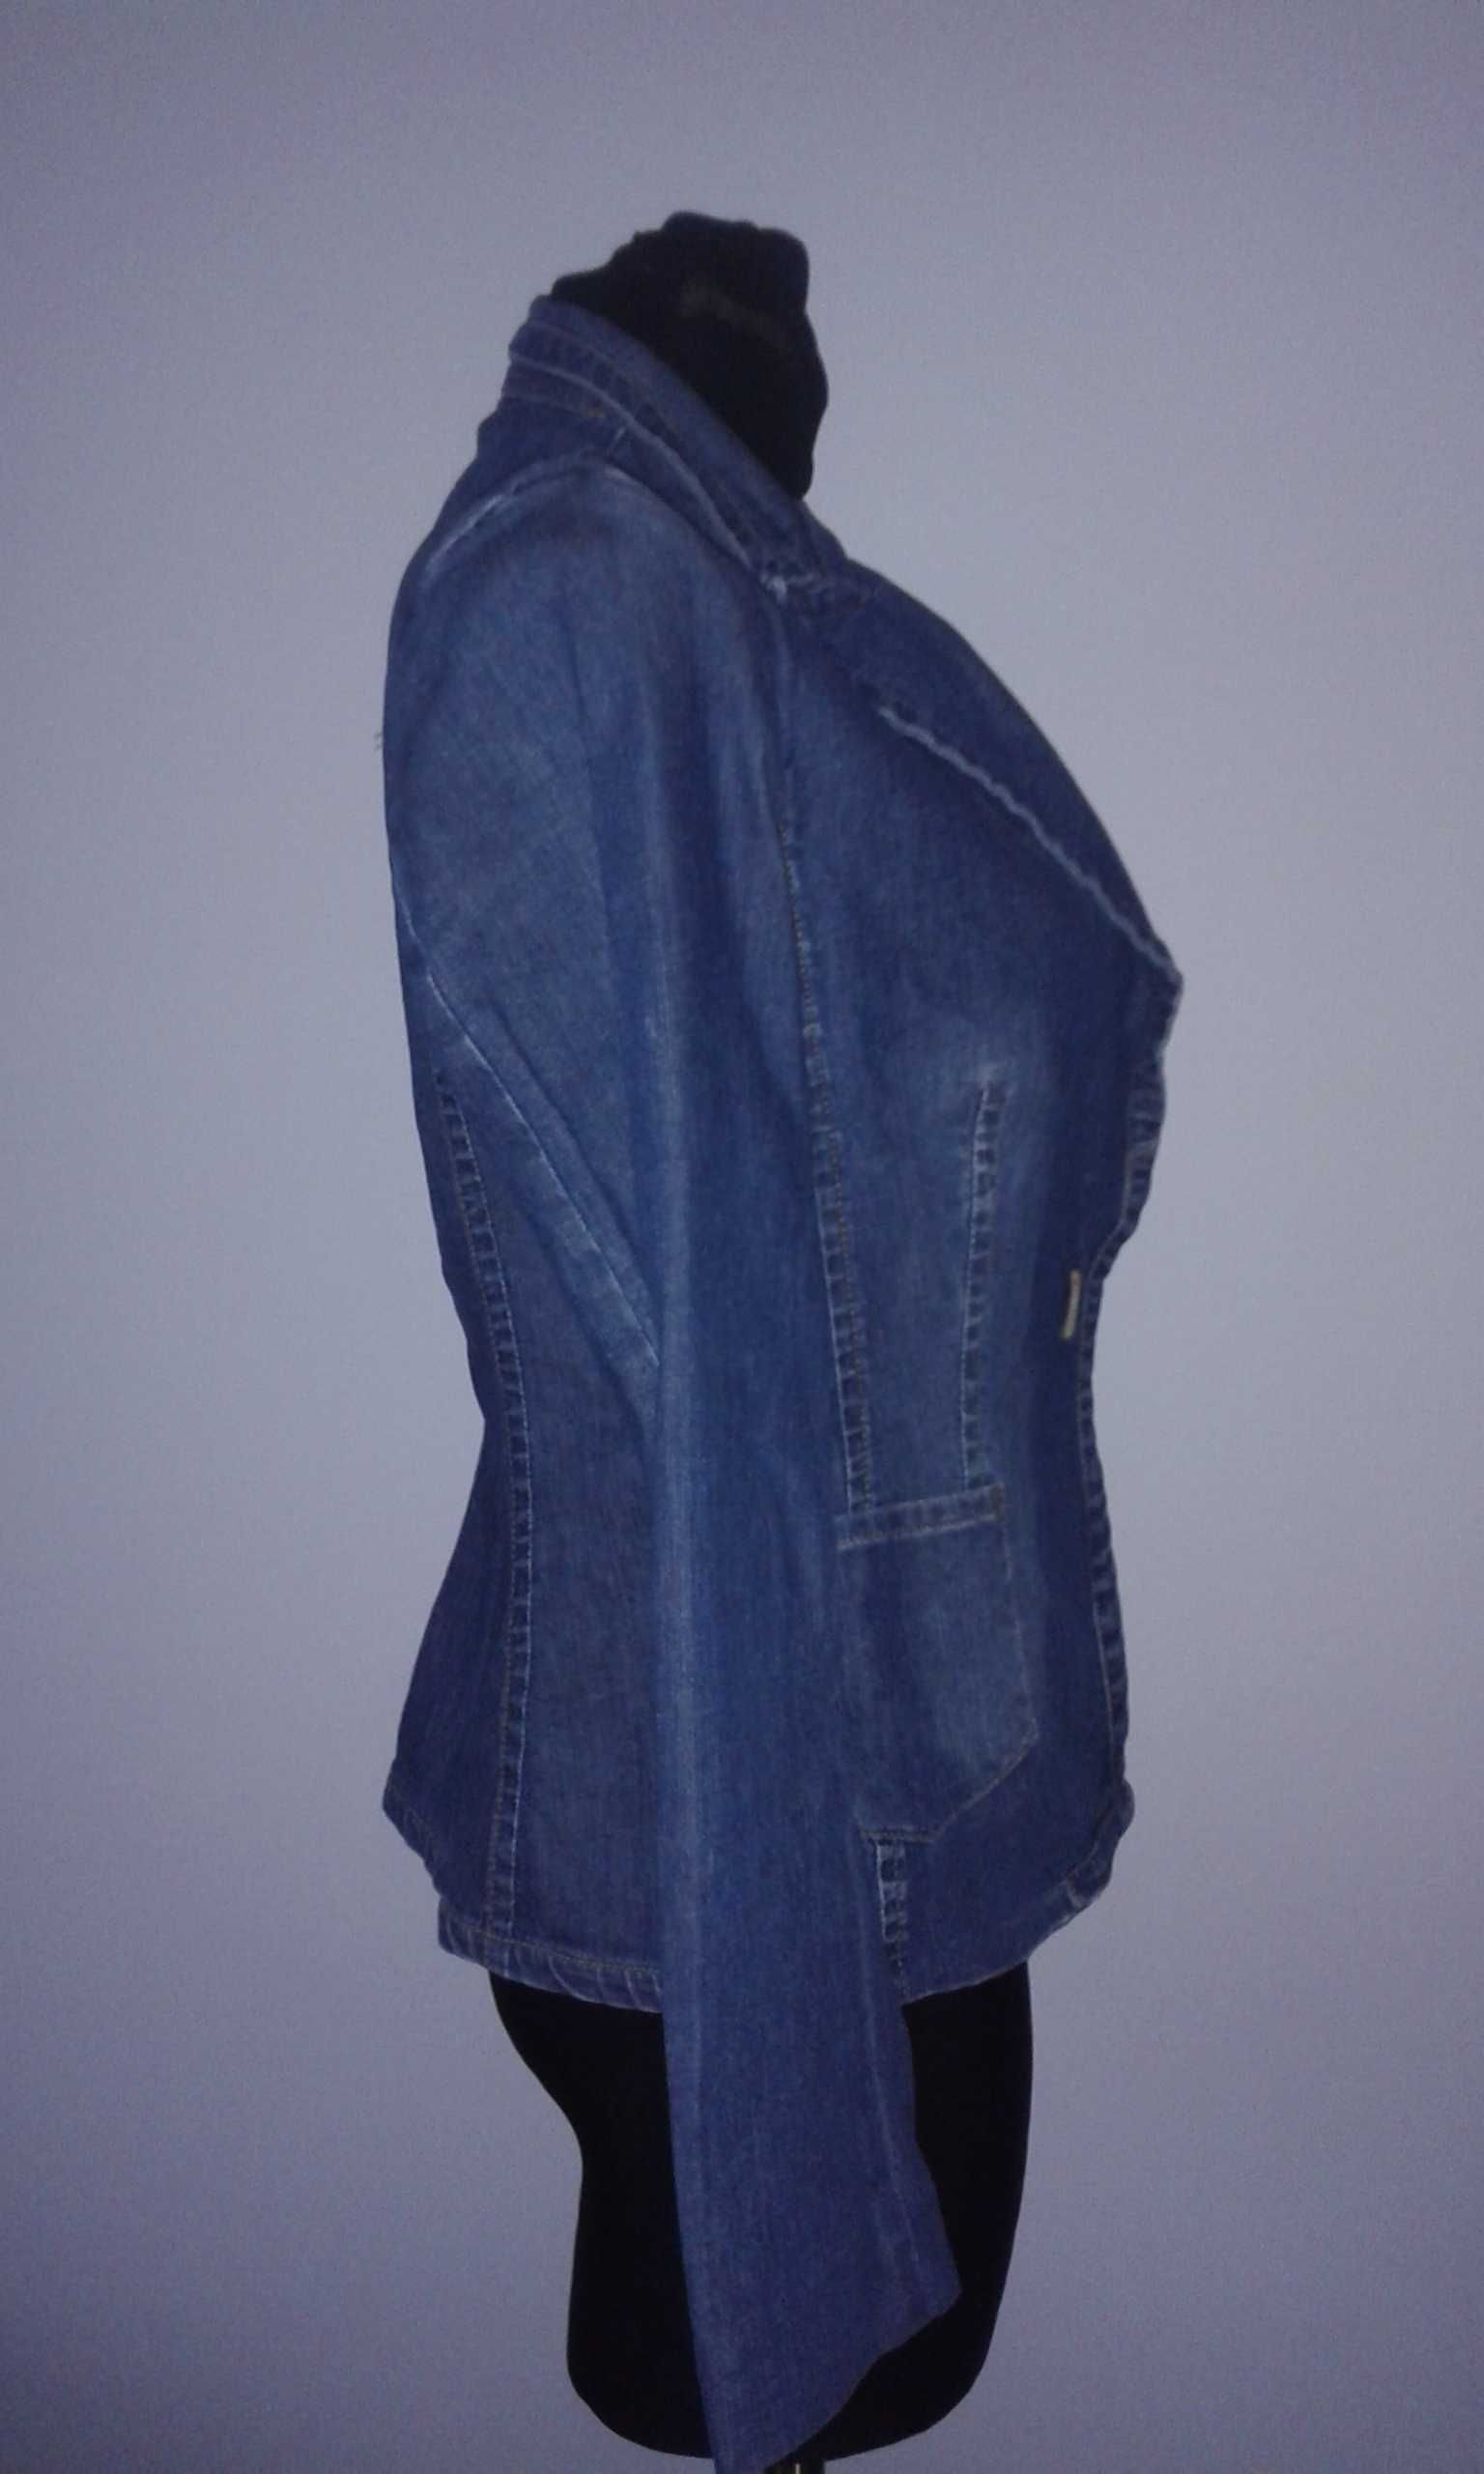 S M 38/40 Kurtka jeans katana żakiet damski wiosenna dżinsowa